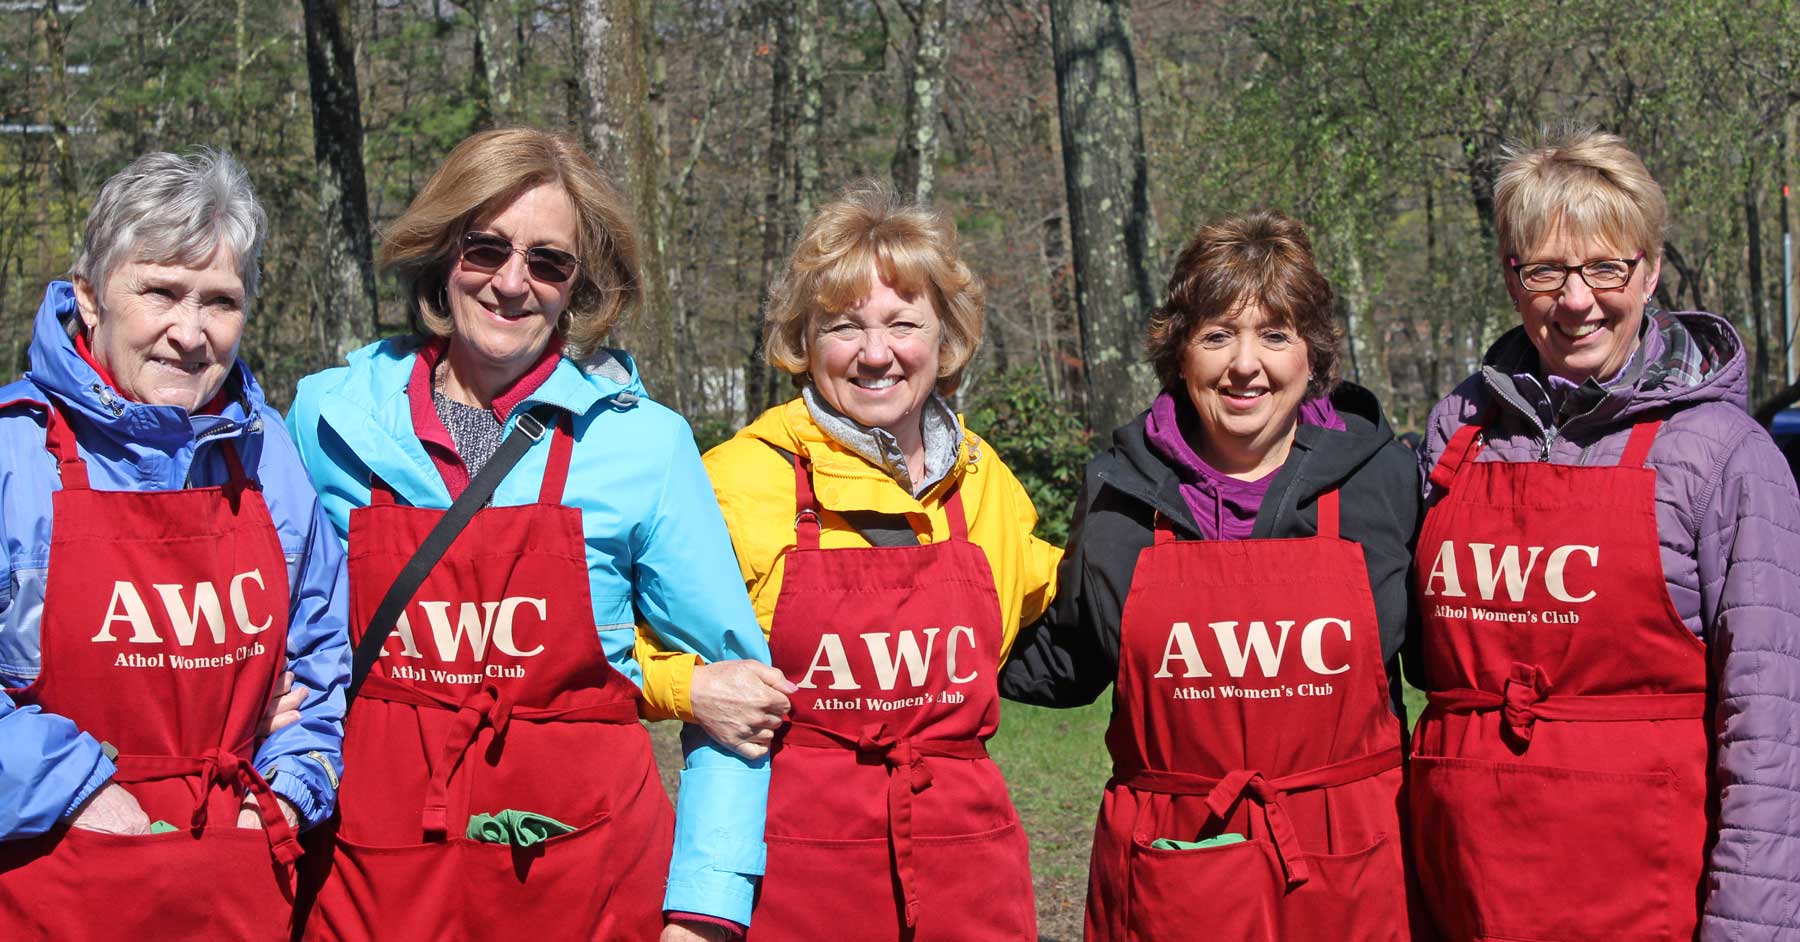 The Athol Women’s Club wearing their red aprons to show their Walkathon team spirit.